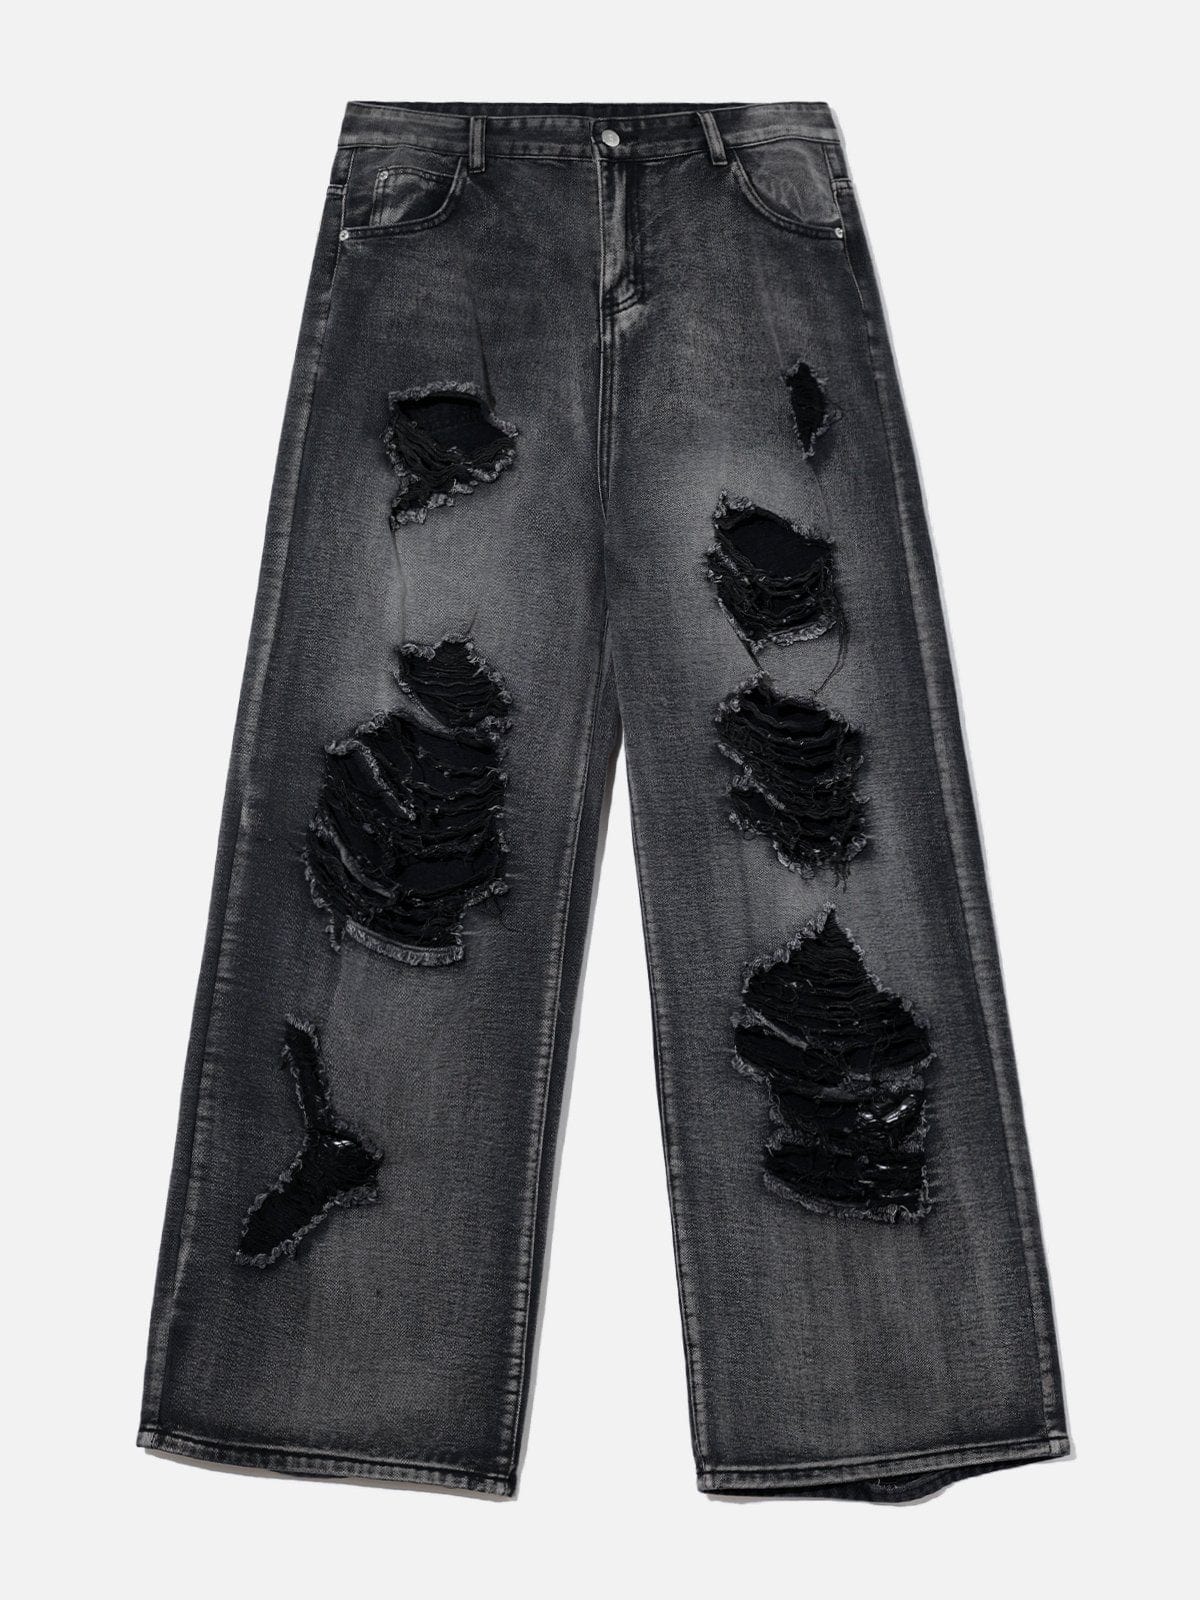 Trendy Streetwear Jeans for a Stylish Wardrobe Upgrade – TALISHKO